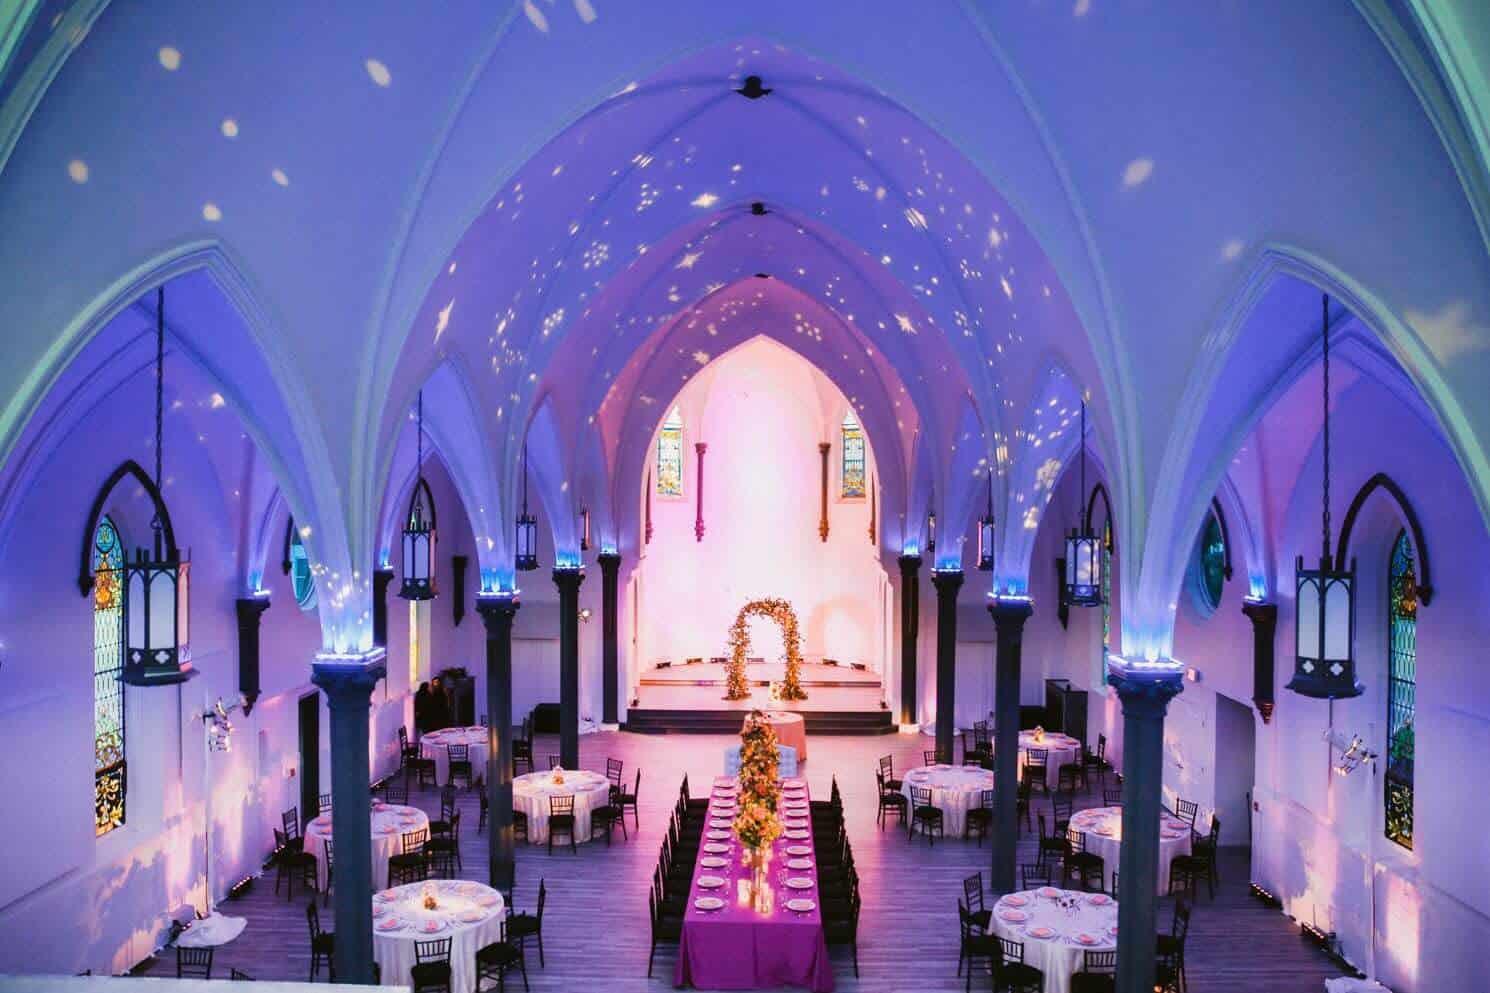 STL wedding venue Main Street Abbey